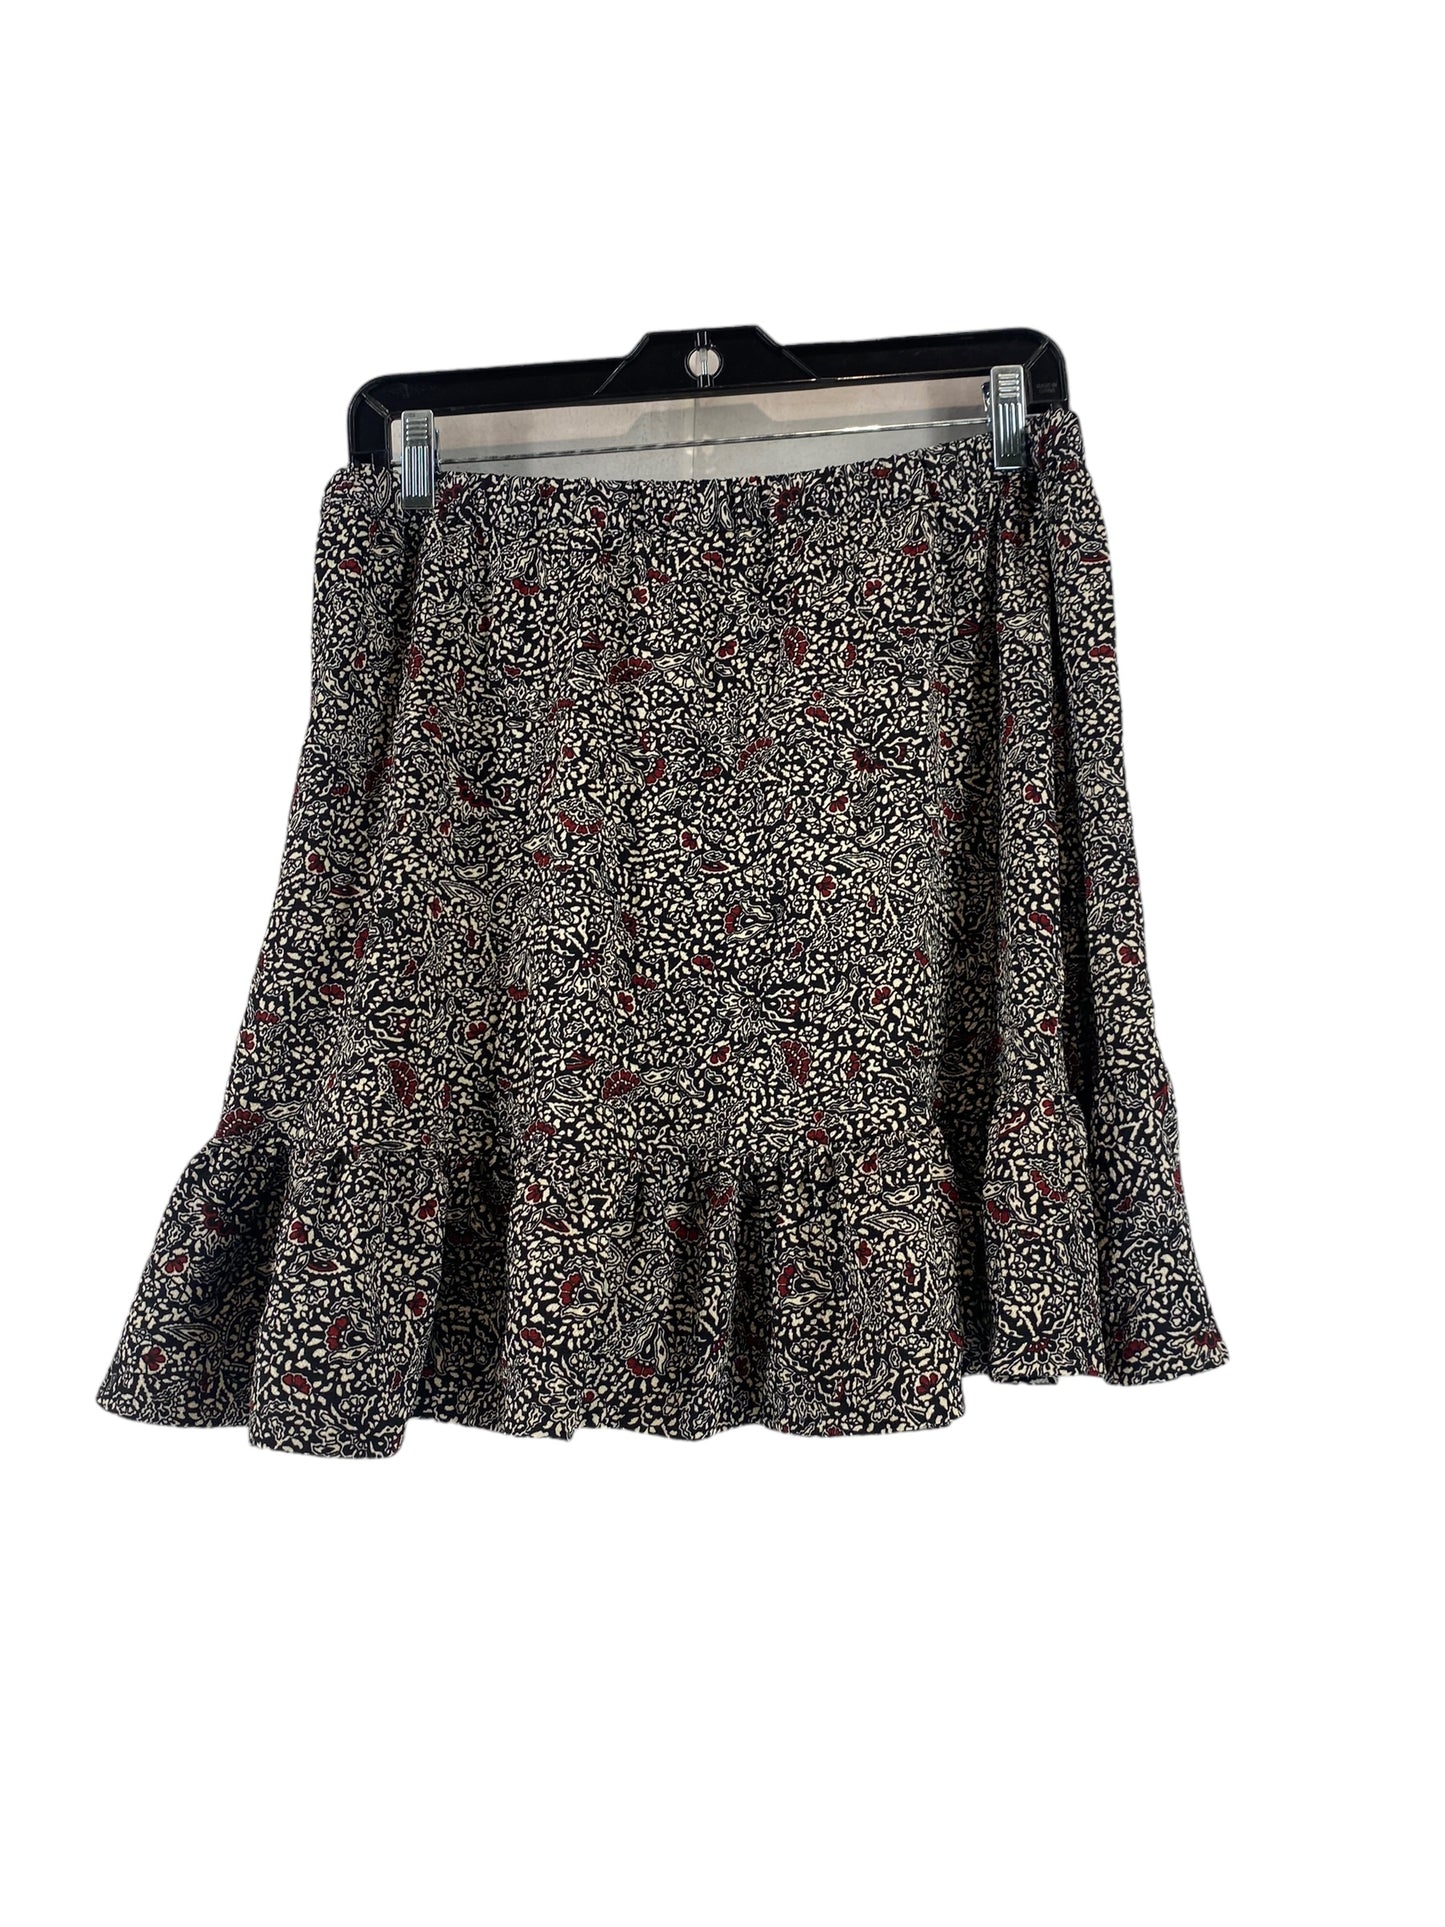 Skirt Mini & Short By Michael By Michael Kors  Size: M